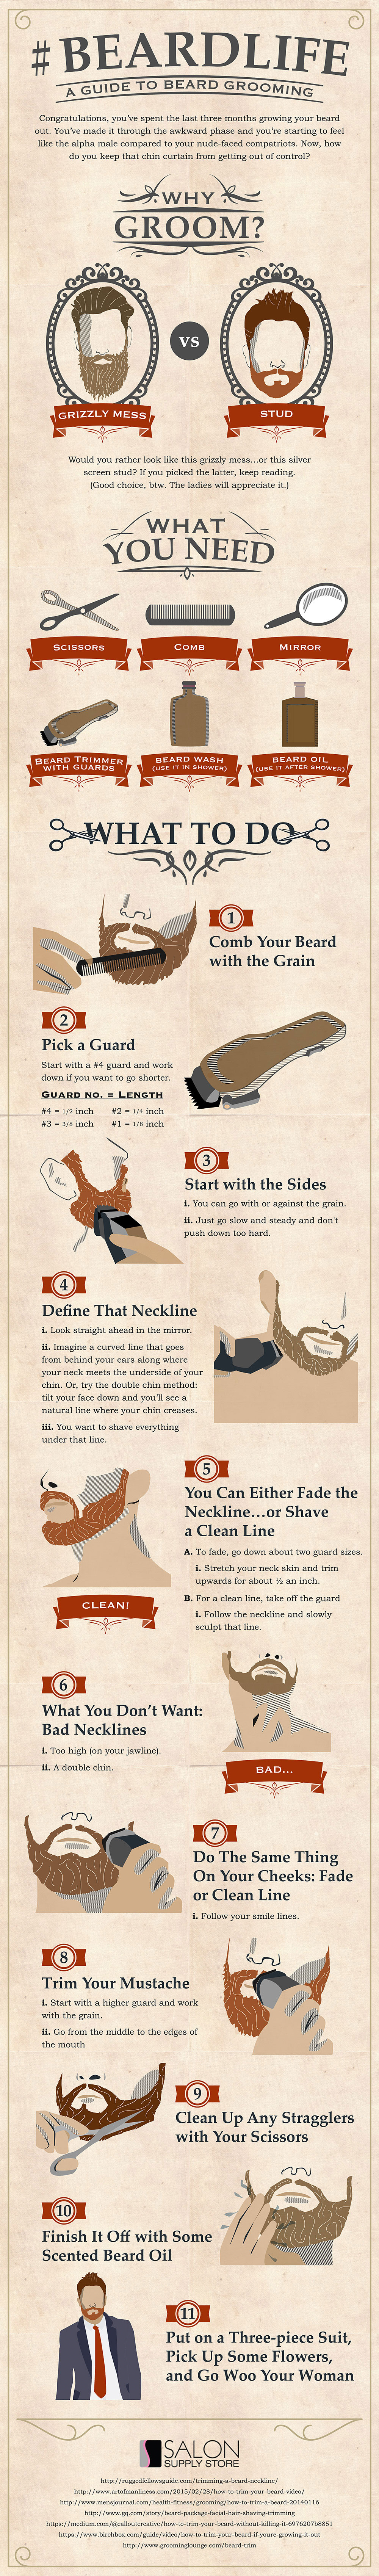 #Beardlife - A Guide To Beard Grooming